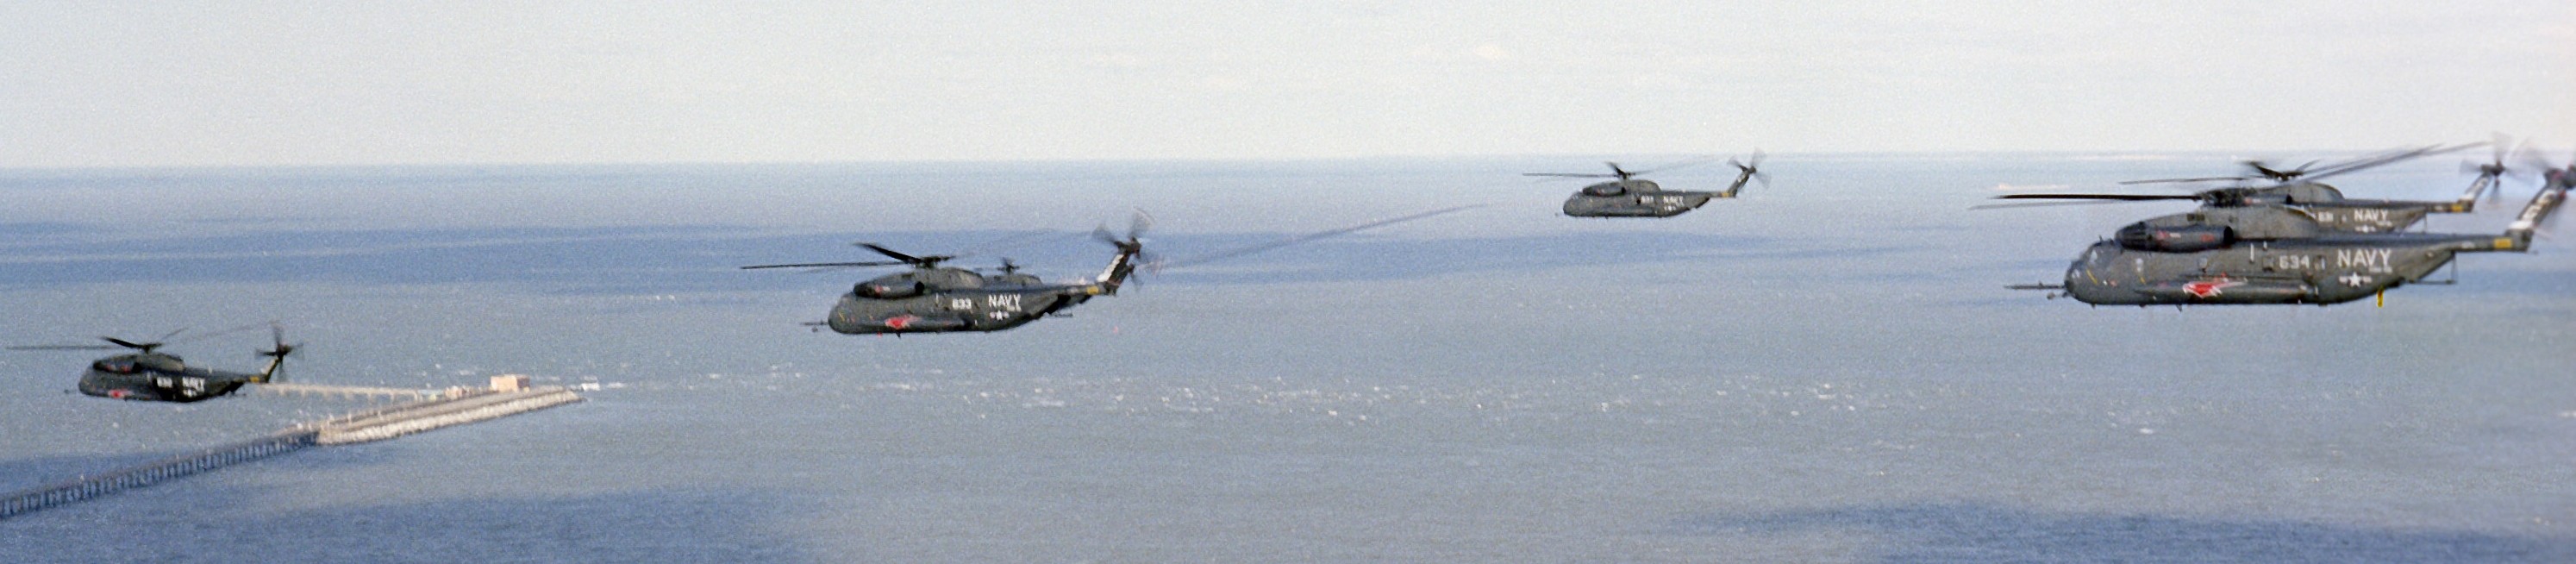 hm-16 seahawks helicopter mine countermeasures squadron navy rh-53d sea stallion 11